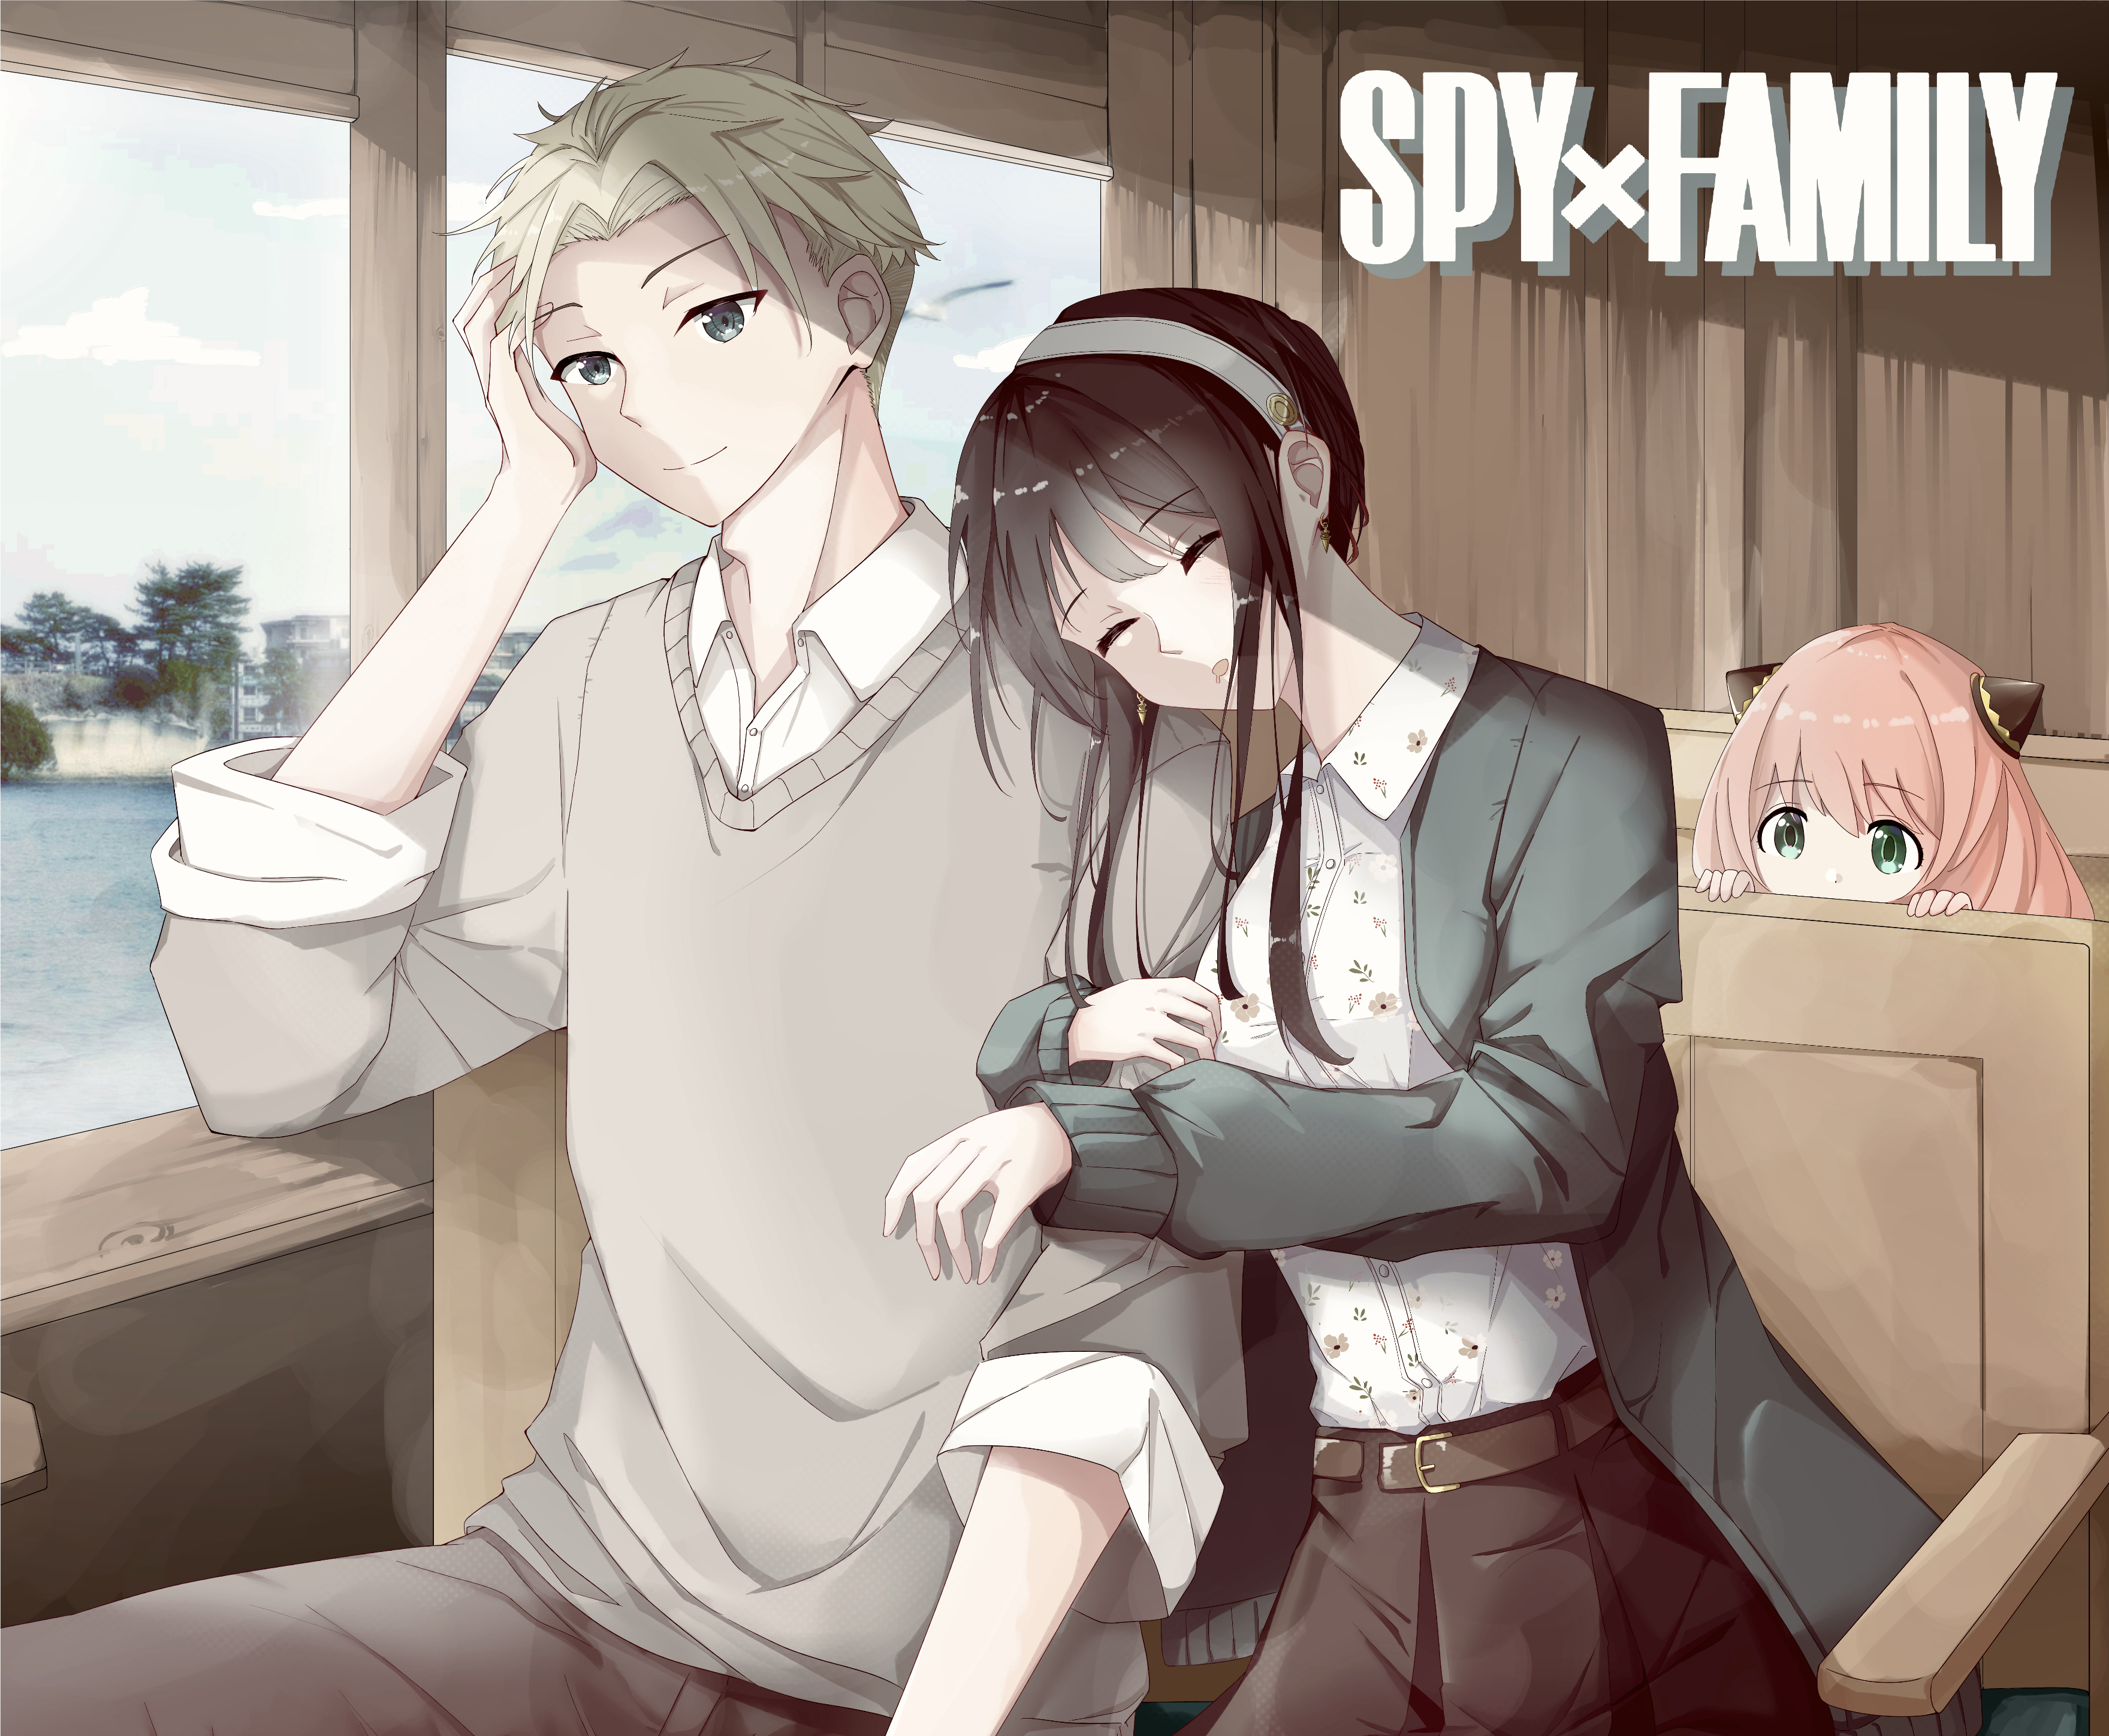 anime #animecut #cenasdeanime #spyxfamily #spyxfamilyedit #twilight #